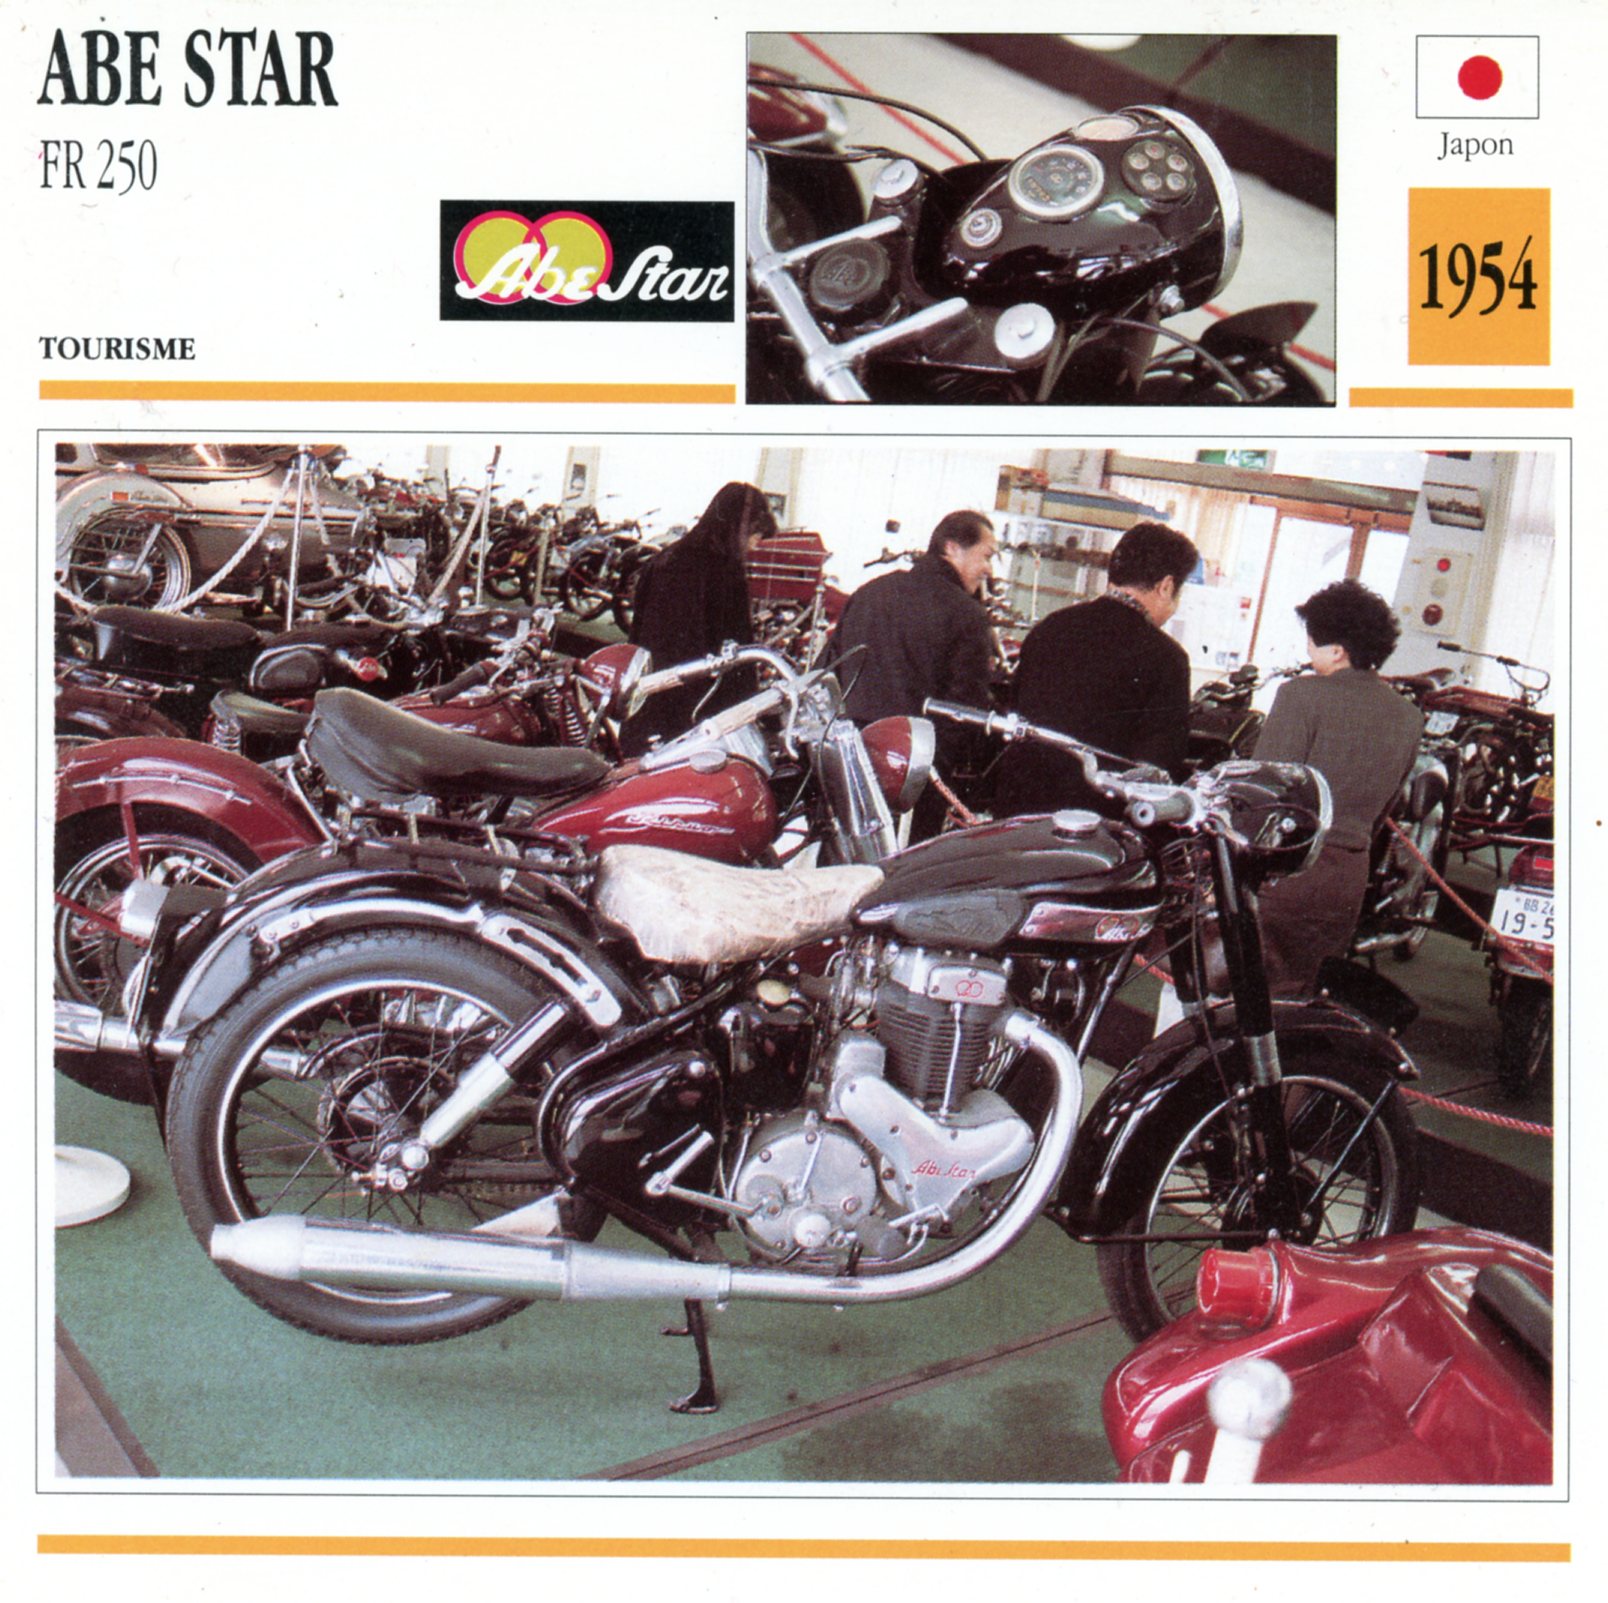 ABE STAR FR 250 1954 - CARTE CARD FICHE MOTO CARACTERISTIQUES